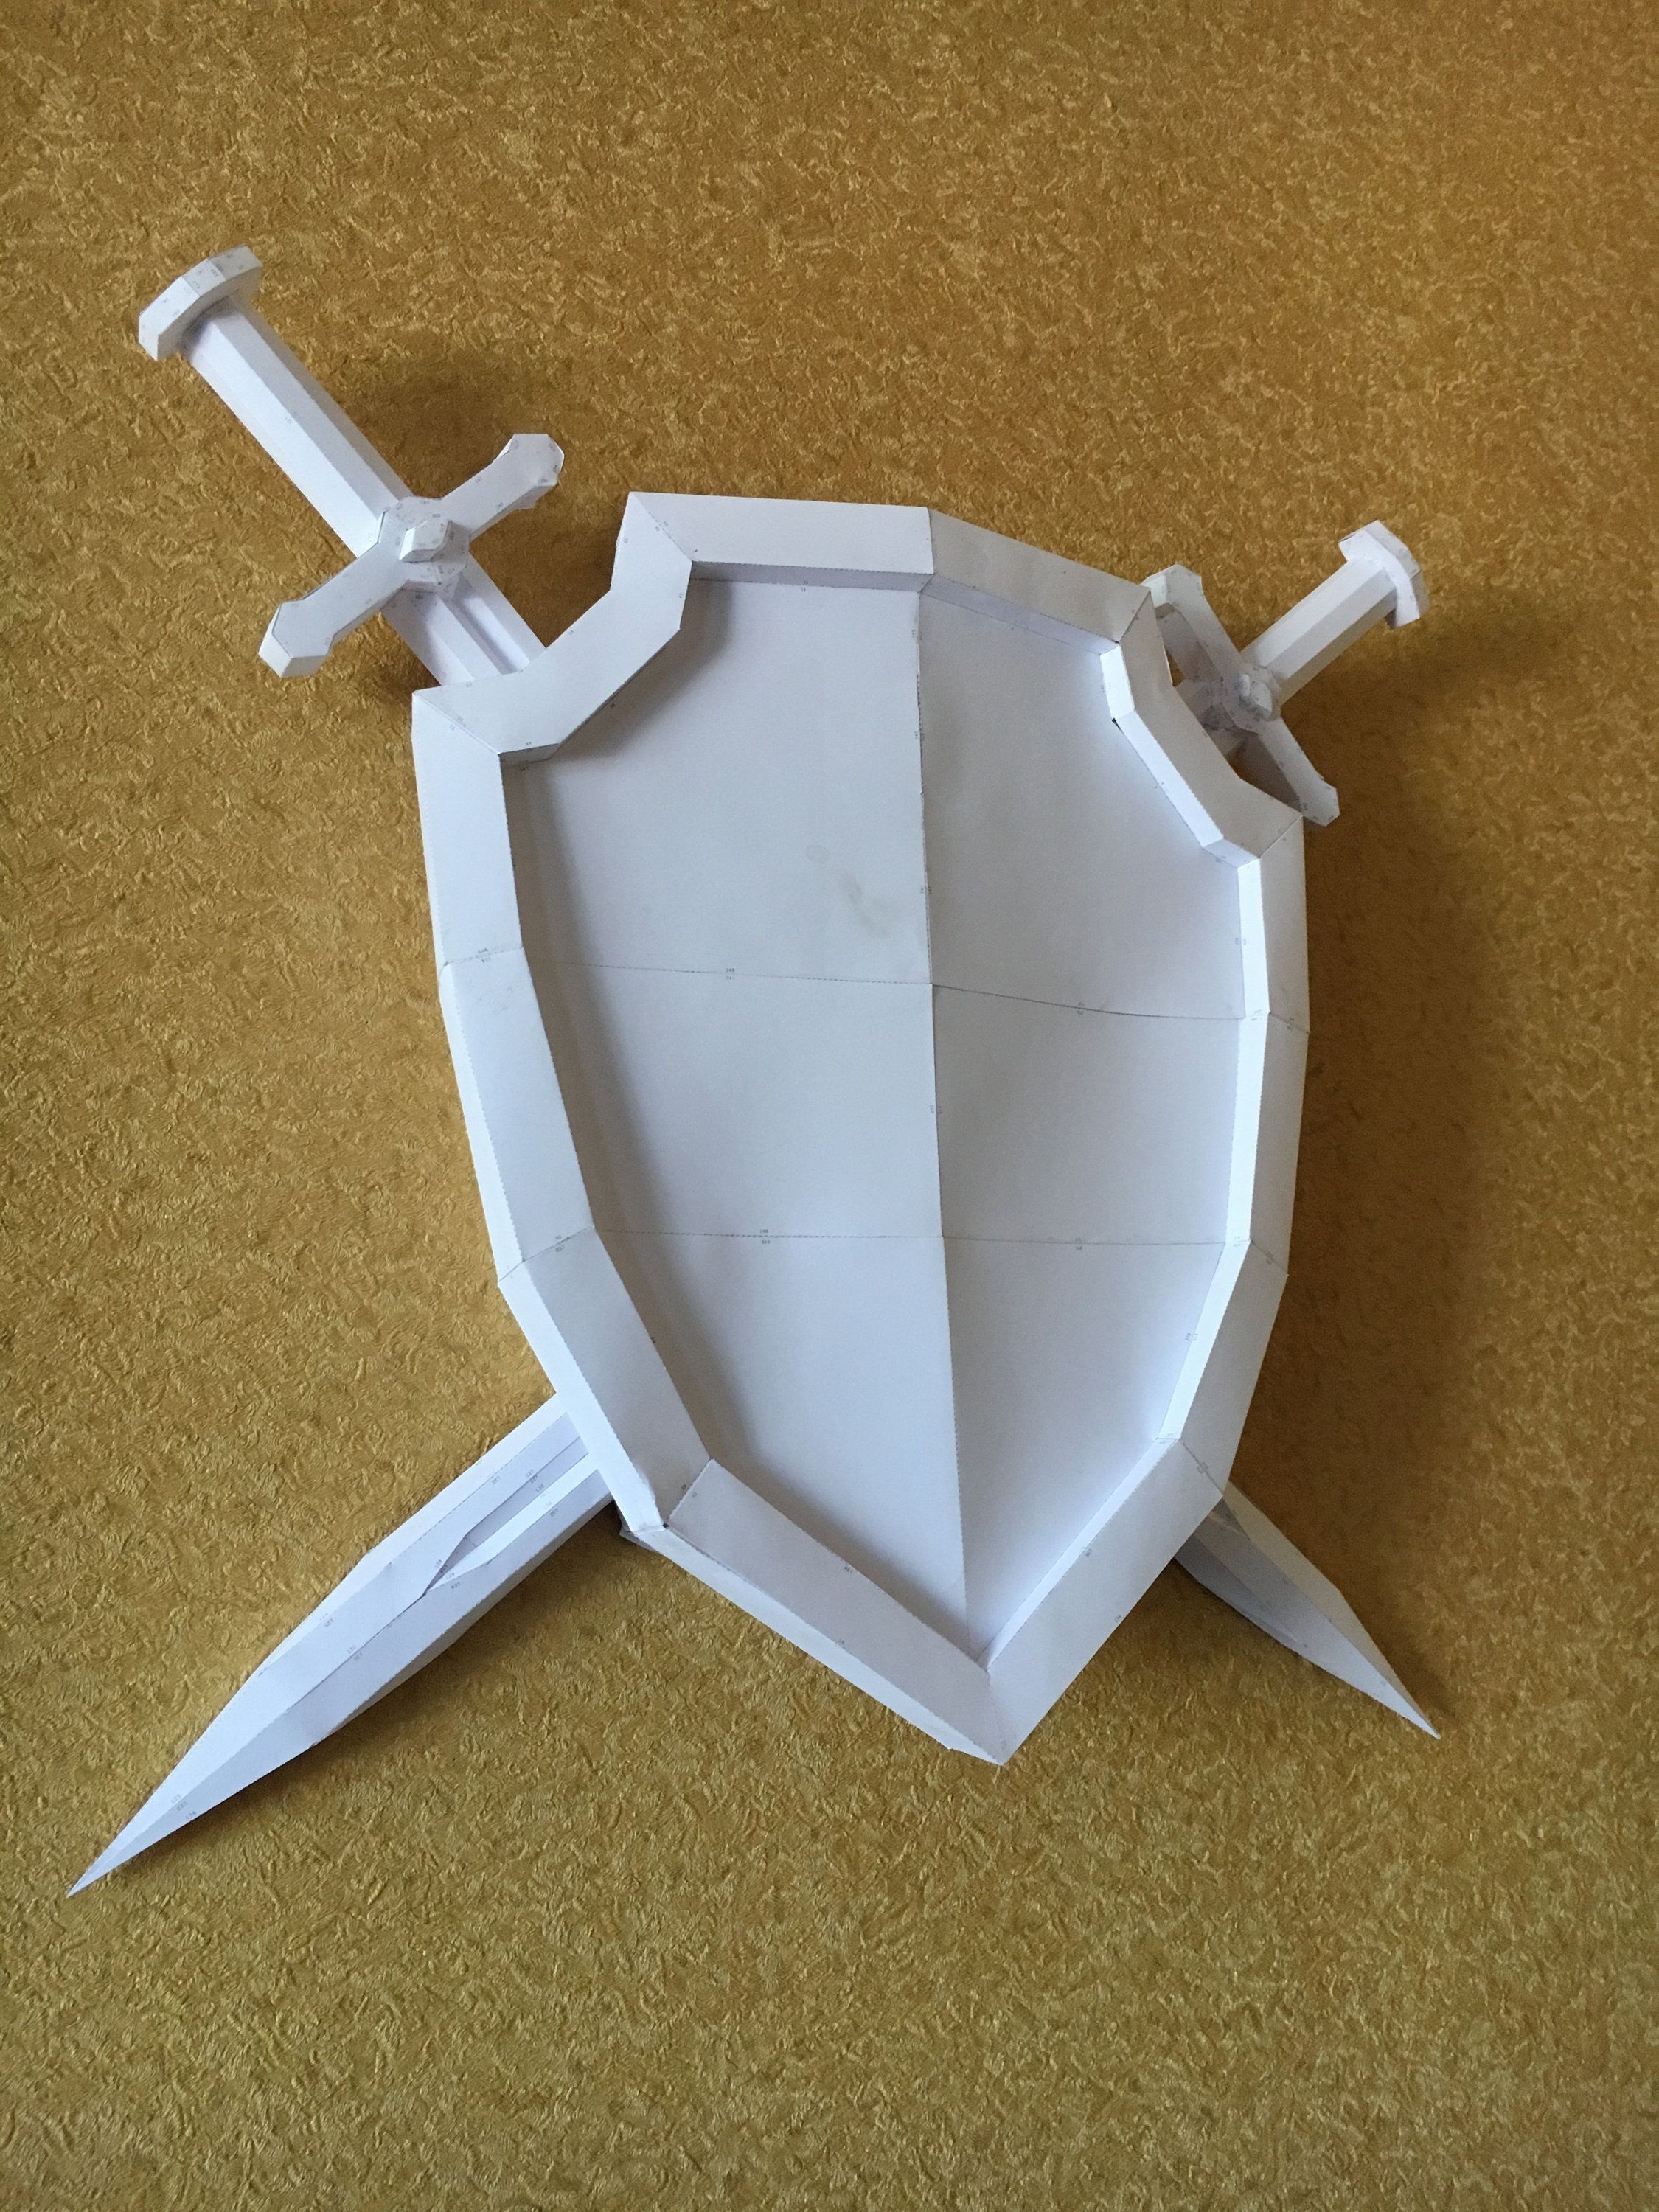 Papercraft origami Sword Shield Diy Papercraft Model ÐÑÐ¼Ð°Ð¶Ð½ÑÐµ Ð¸Ð·Ð´ÐµÐ Ð¸Ñ